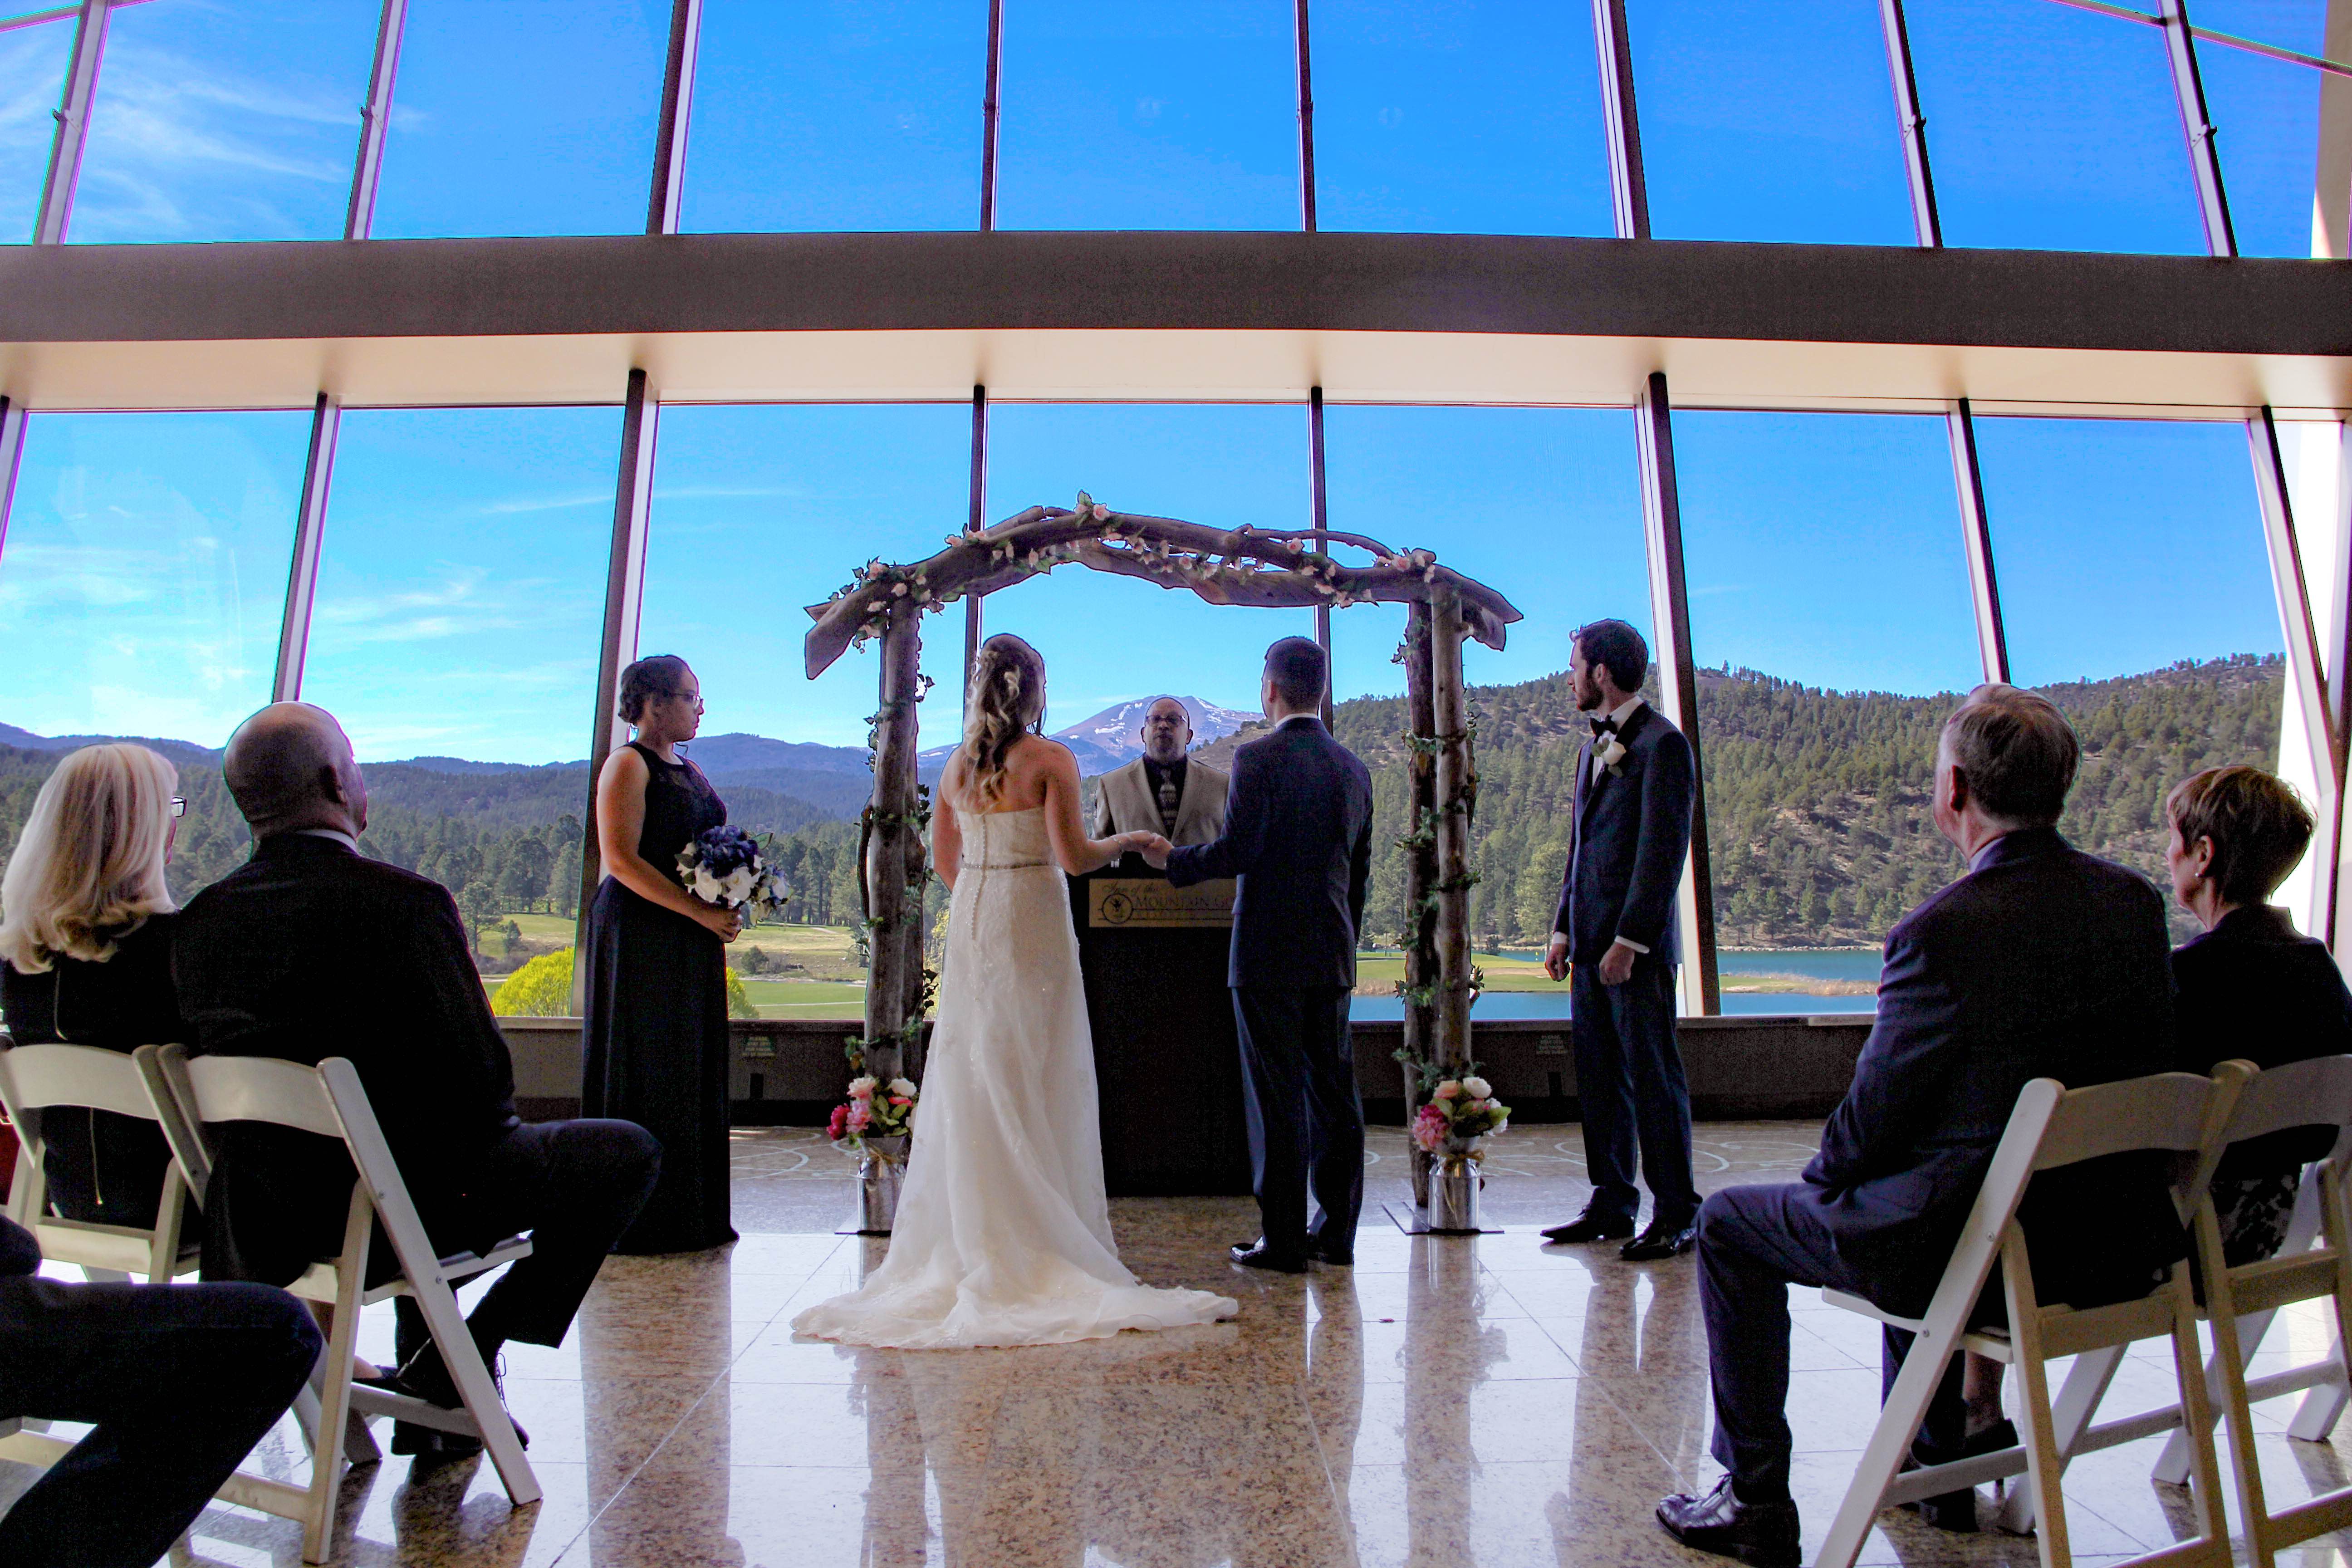 Inn of the Mountain Gods Resort & Casino | Wedding Collective